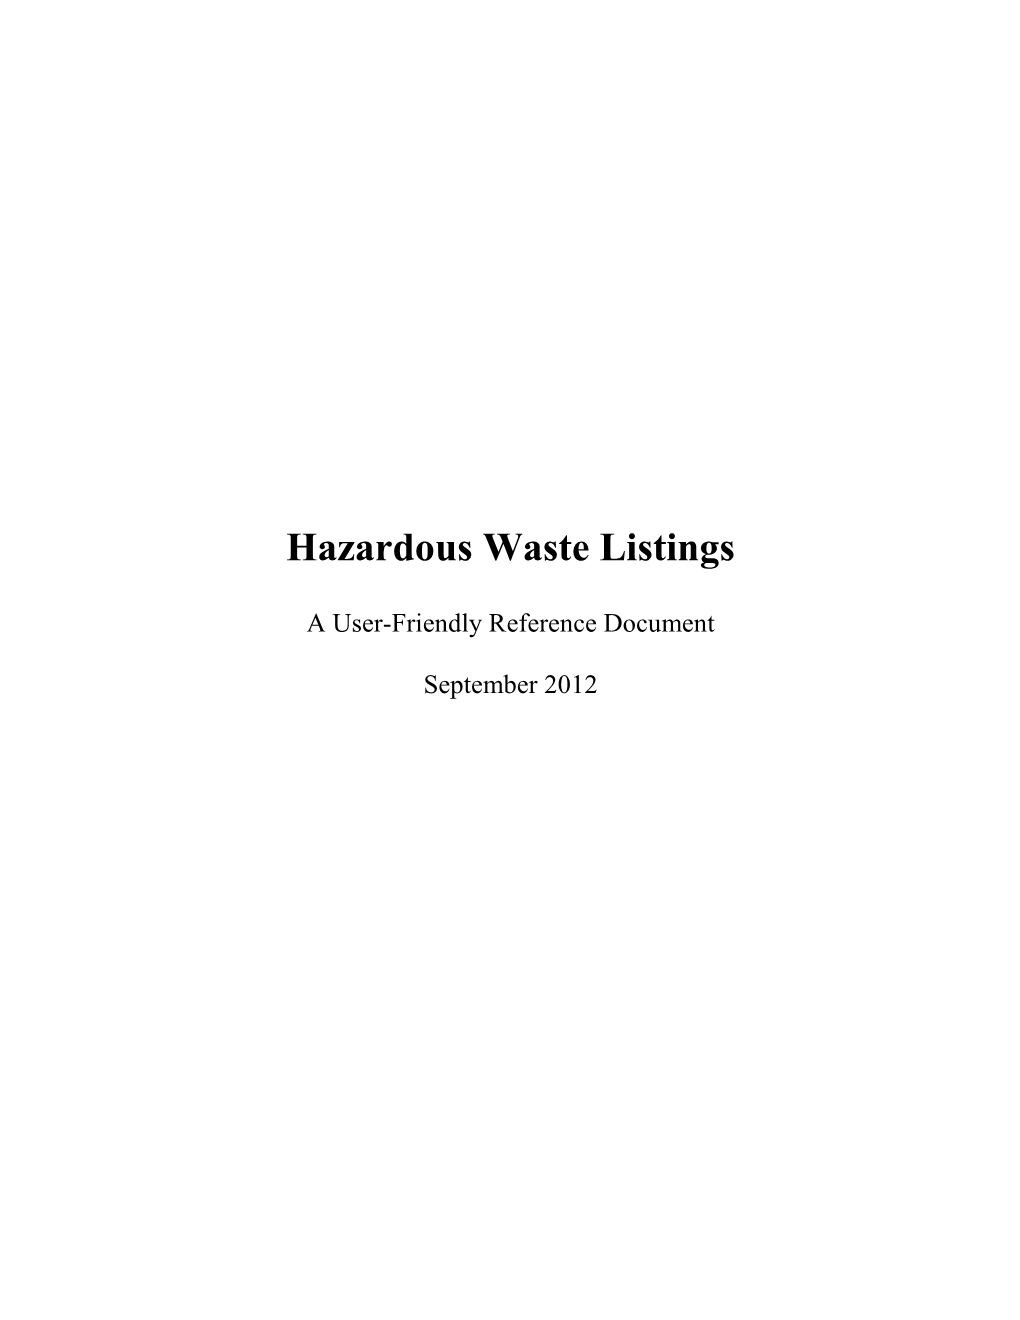 EPA's Hazardous Waste Listing